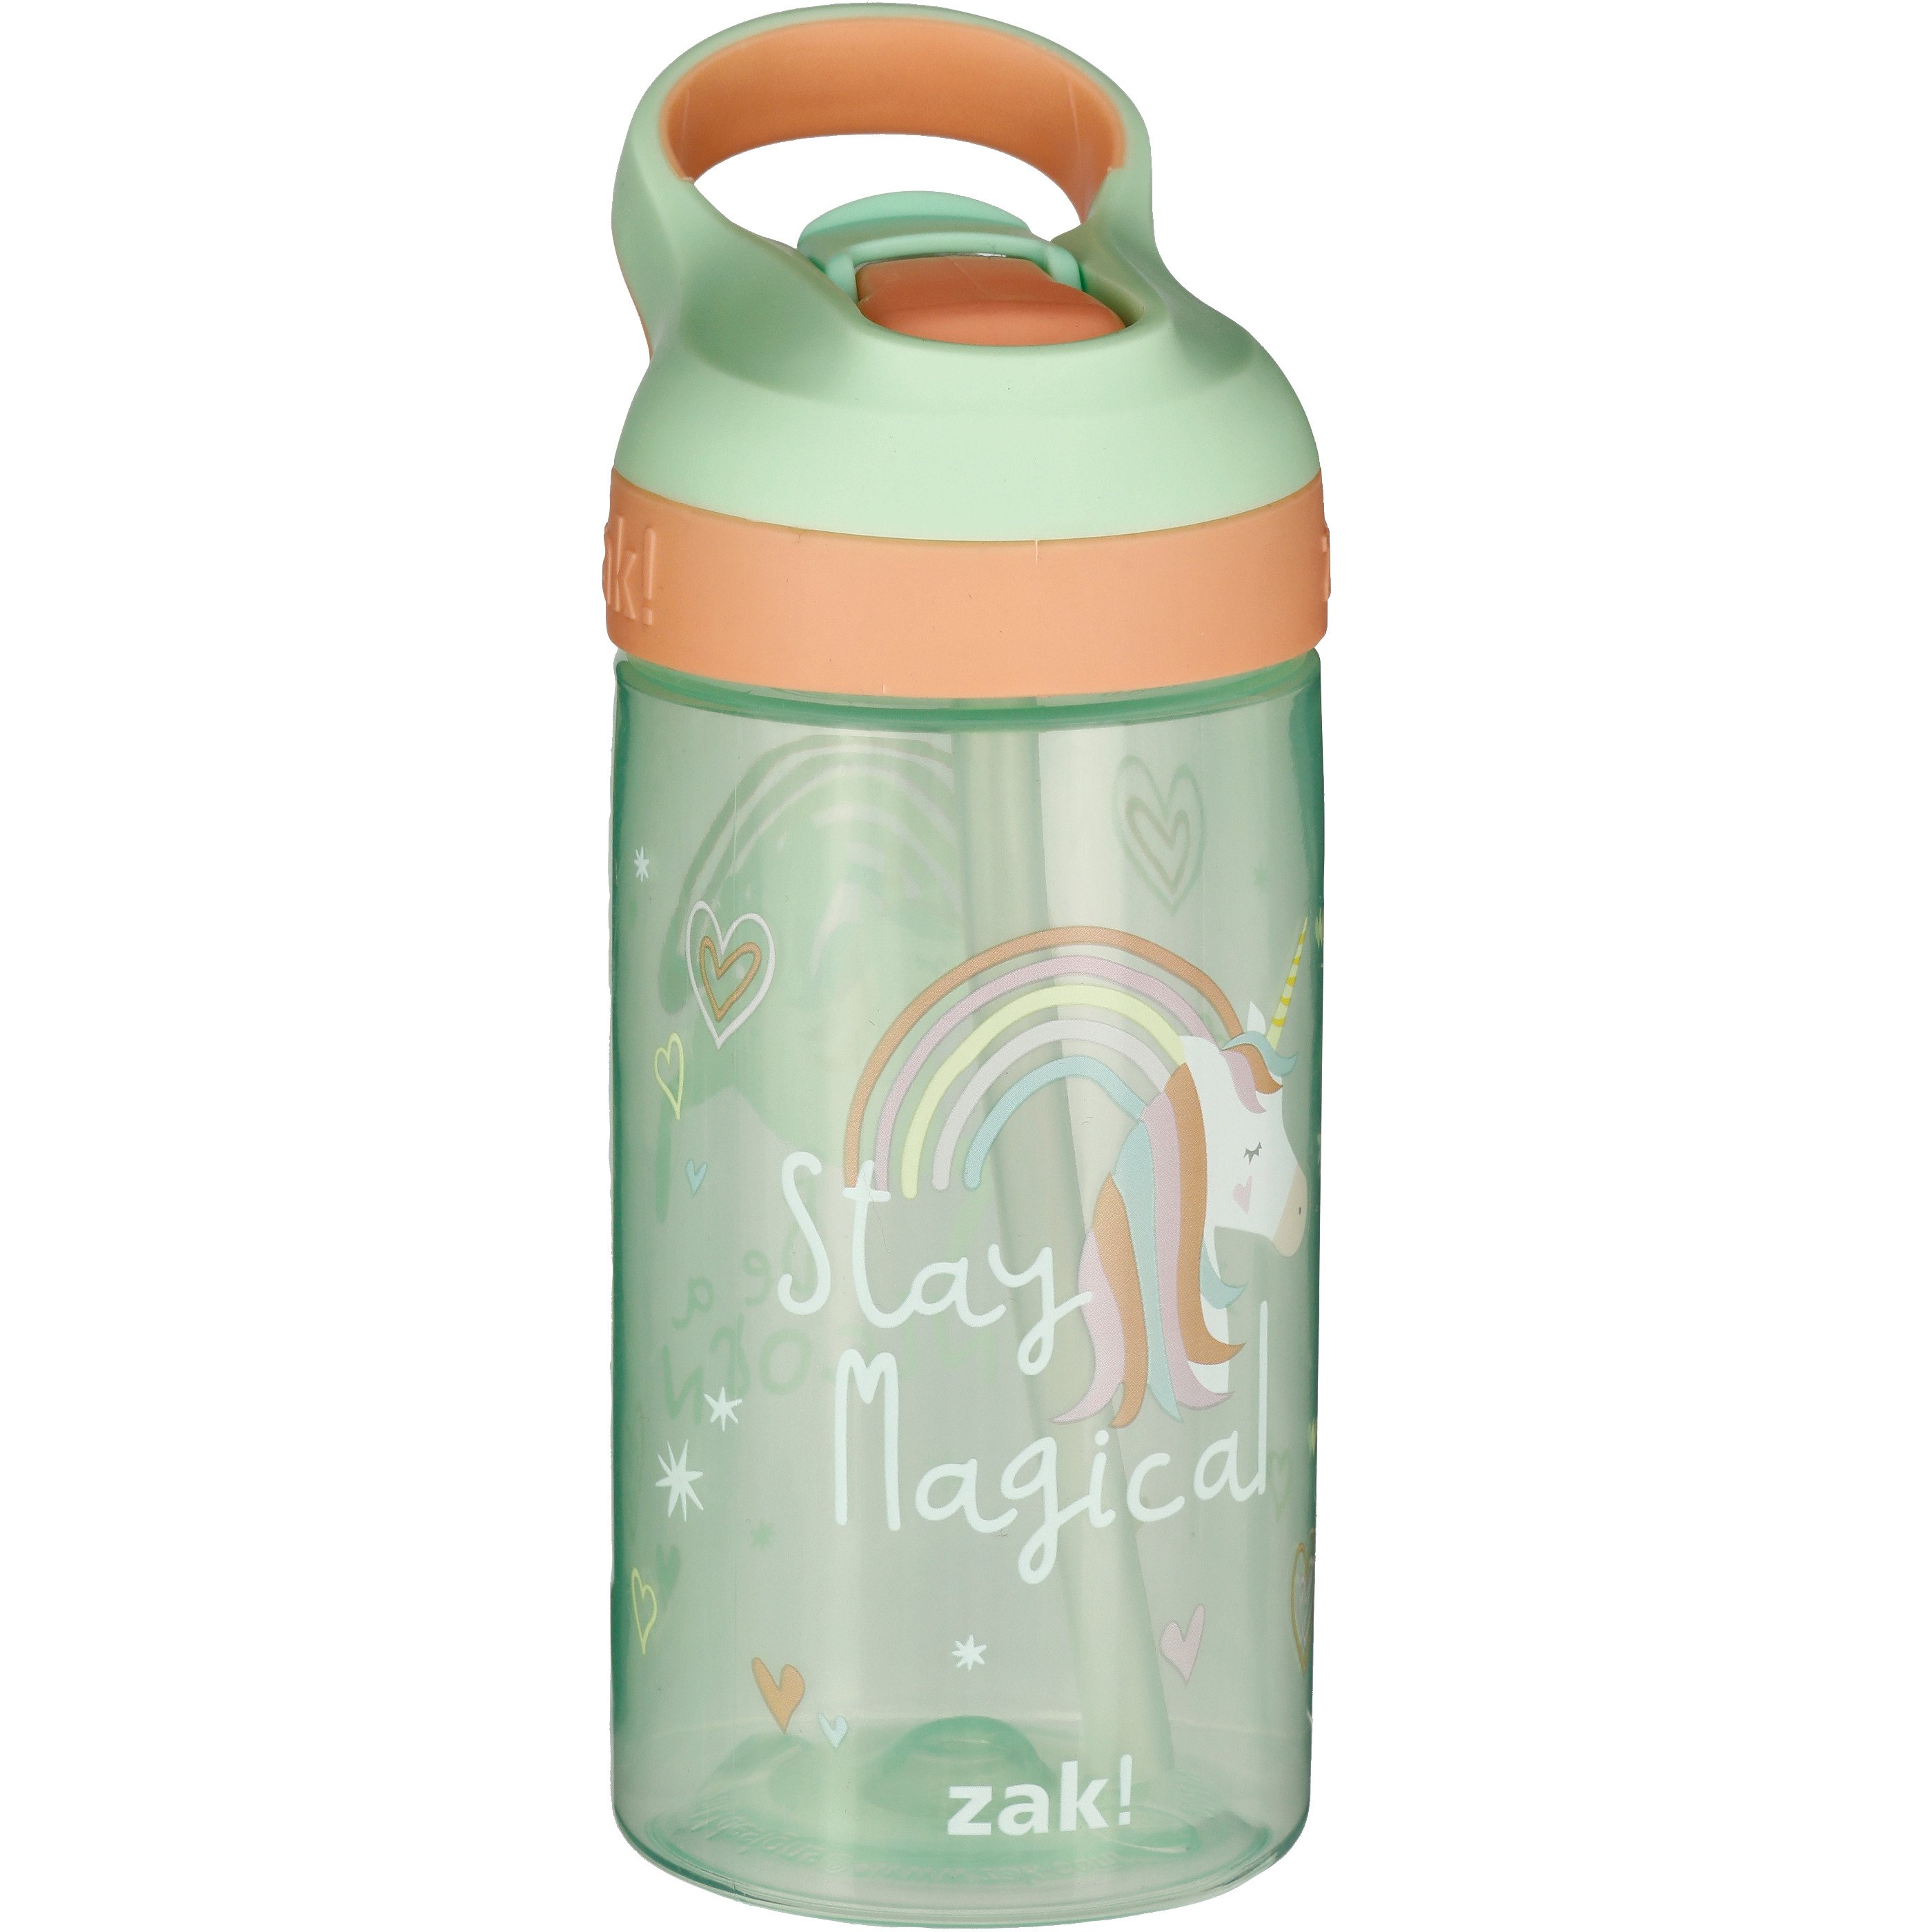 Zak! Designs Stay Magical Unicorn Reusable Atlantic Kids Water